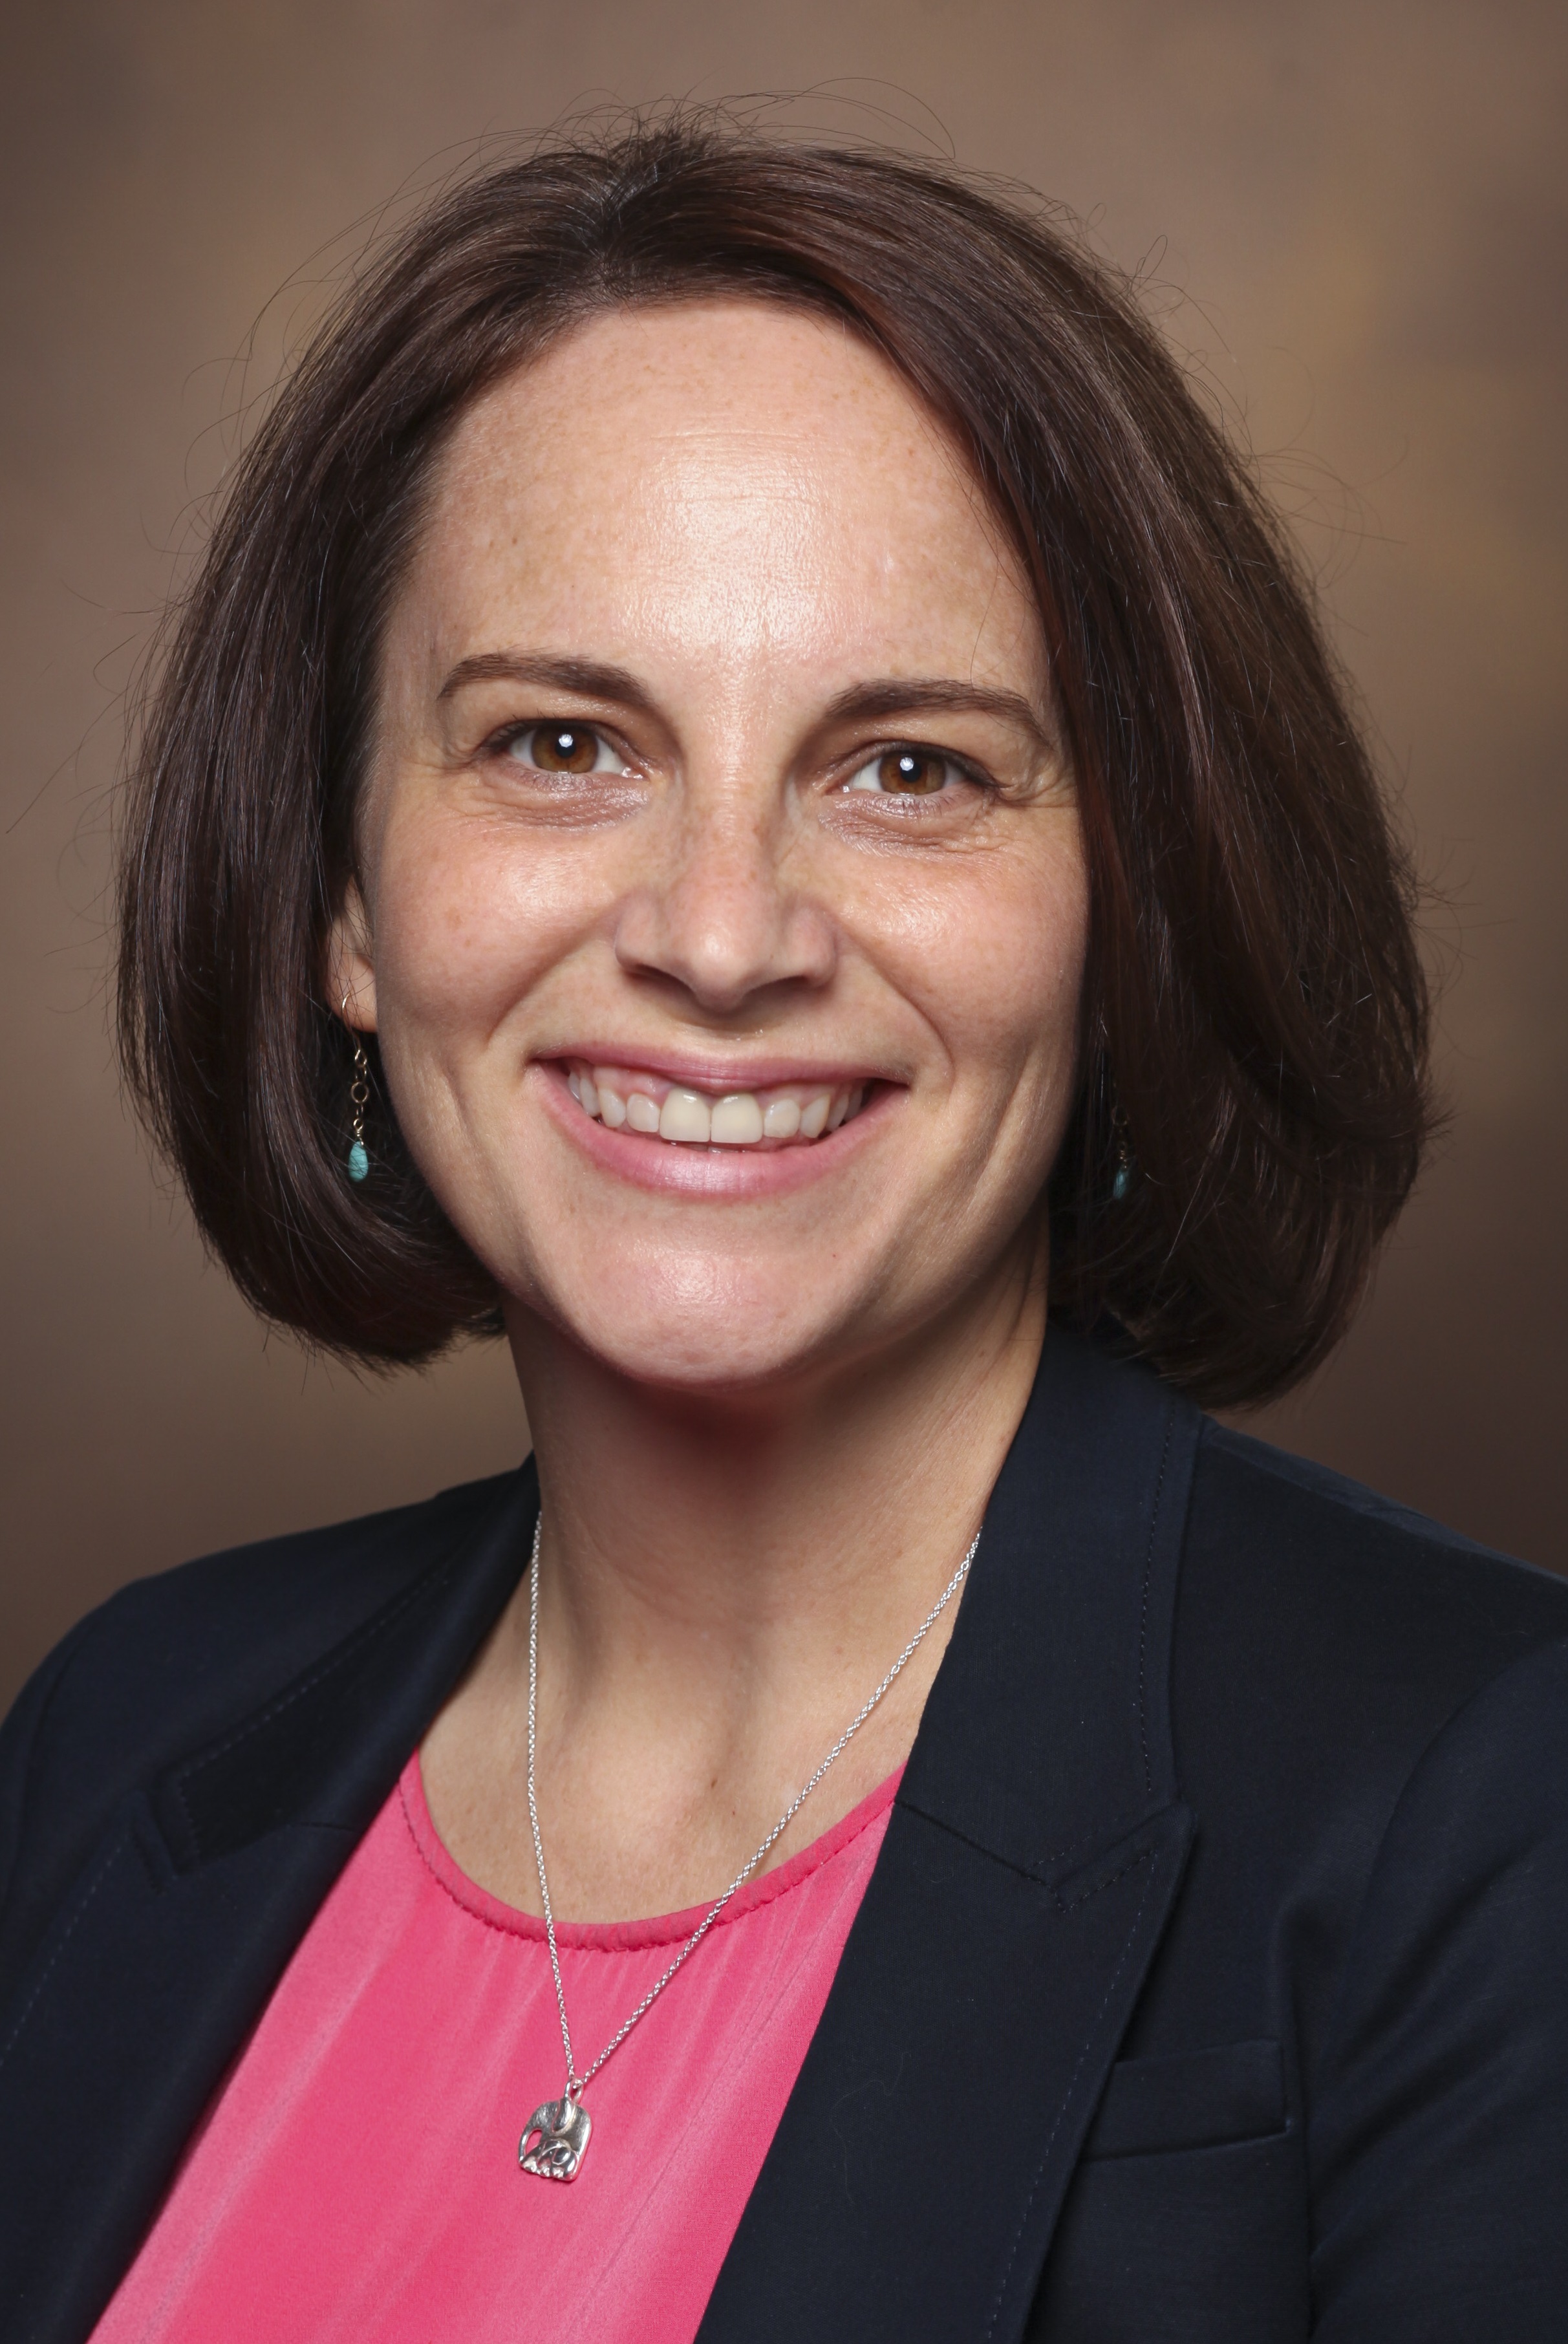 Assistant Professor of Medicine, Health, and Society Tara McKay